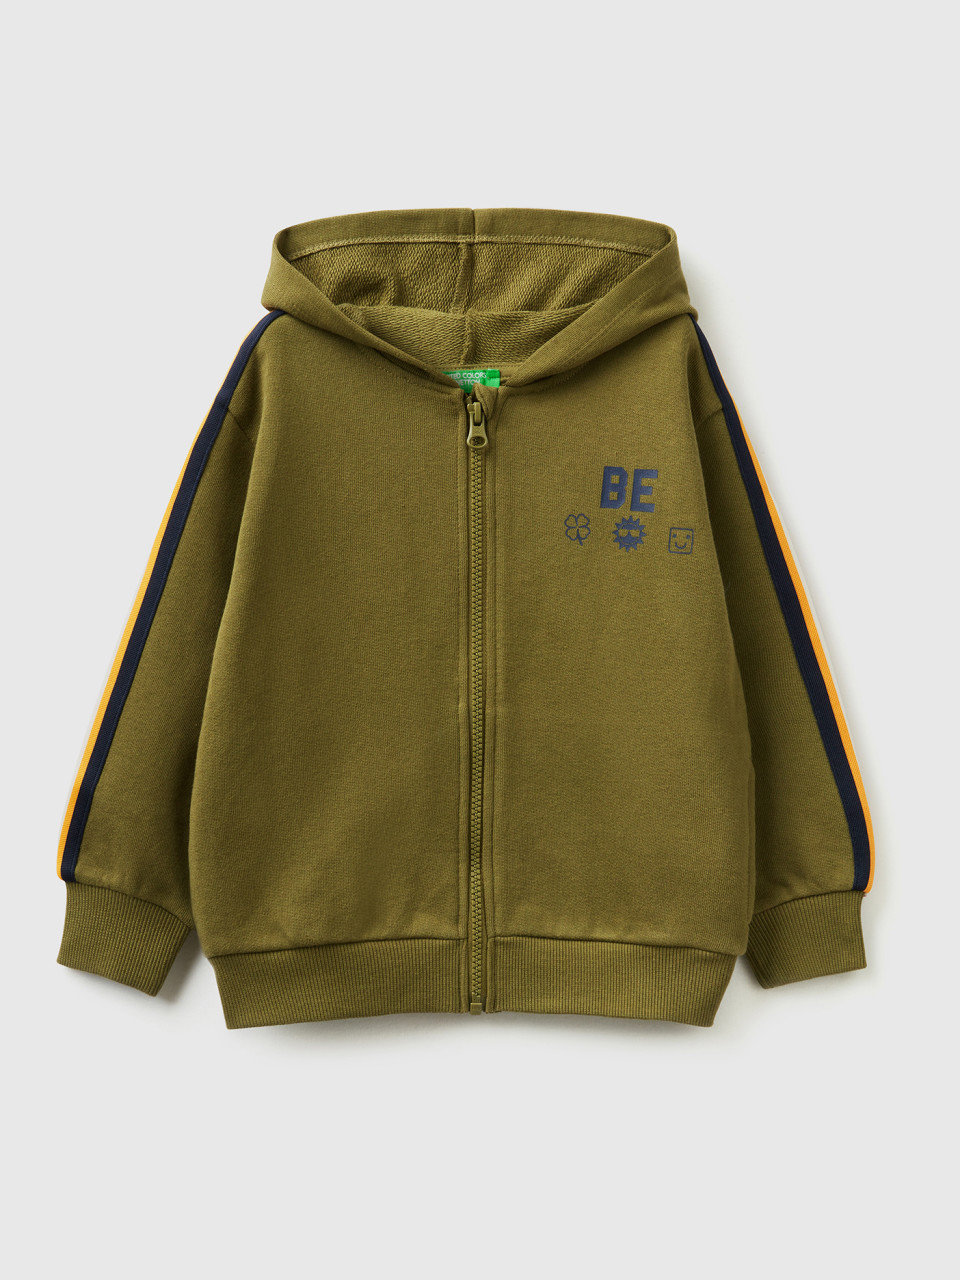 Benetton, Sweatshirt Mit Print be, Militärgrün, male